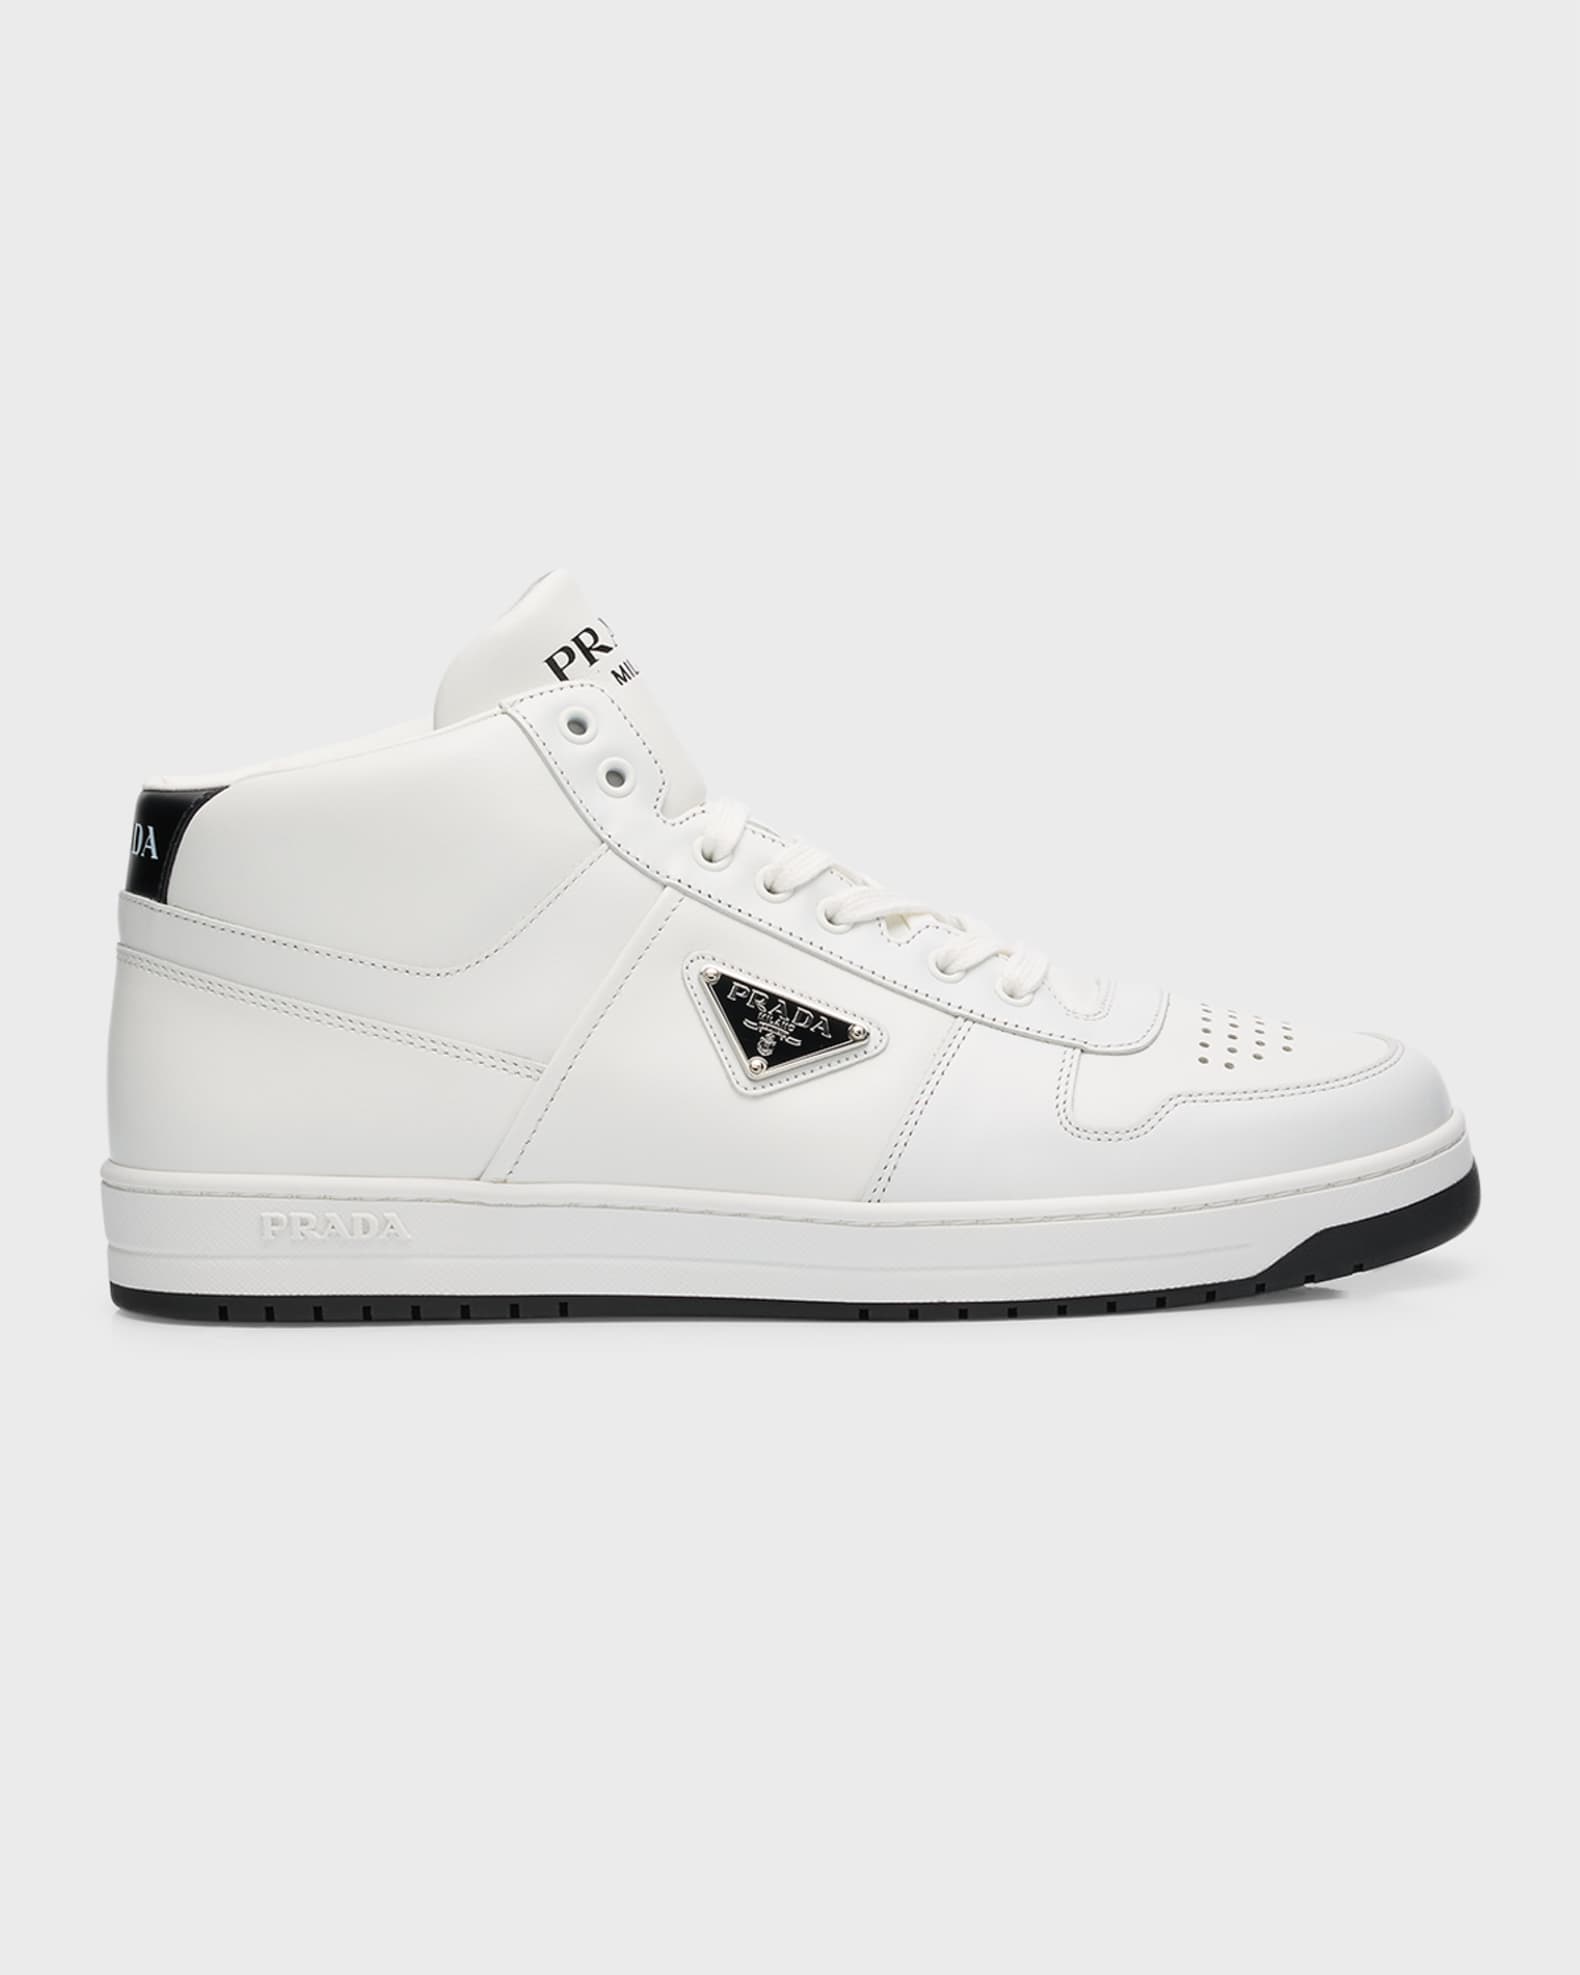 Prada Men's Downtown Vitello High Top Sneakers | Neiman Marcus